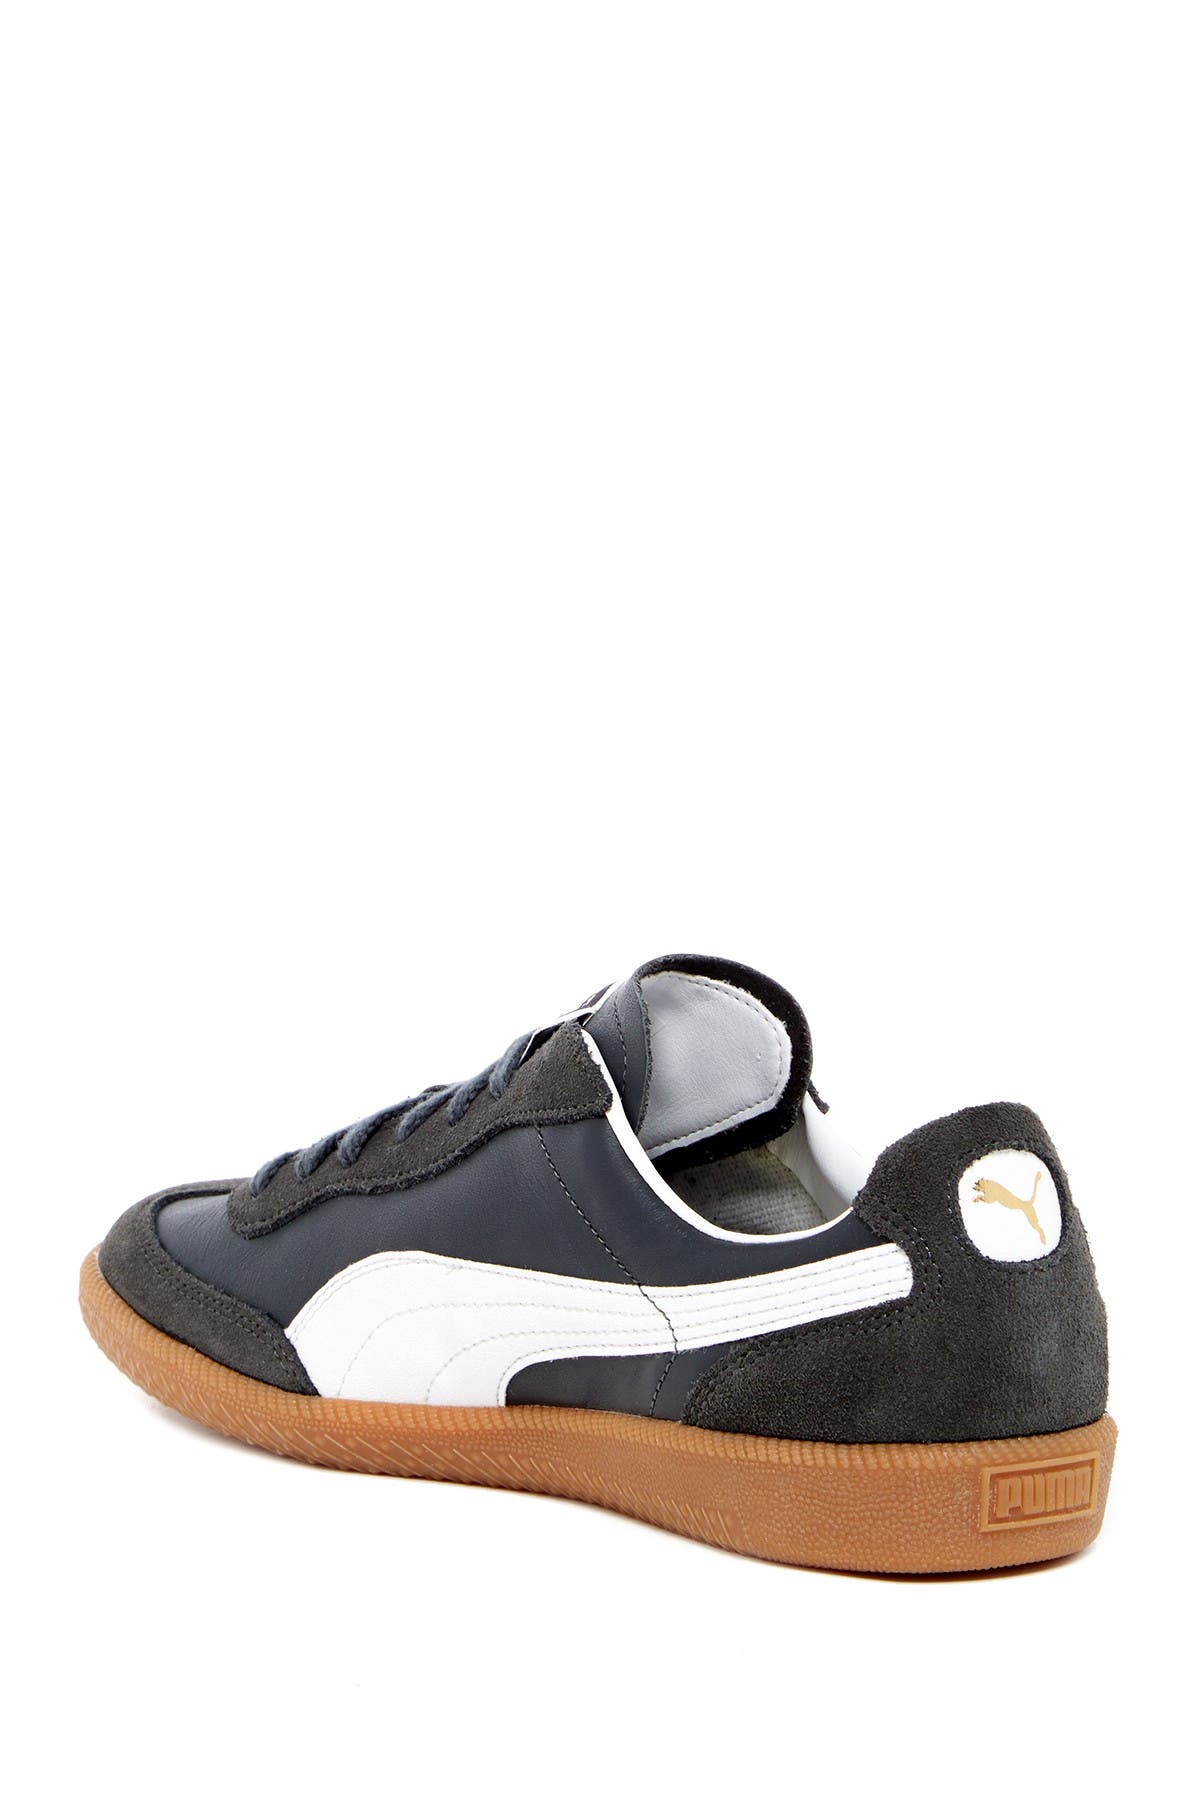 puma leather sneaker